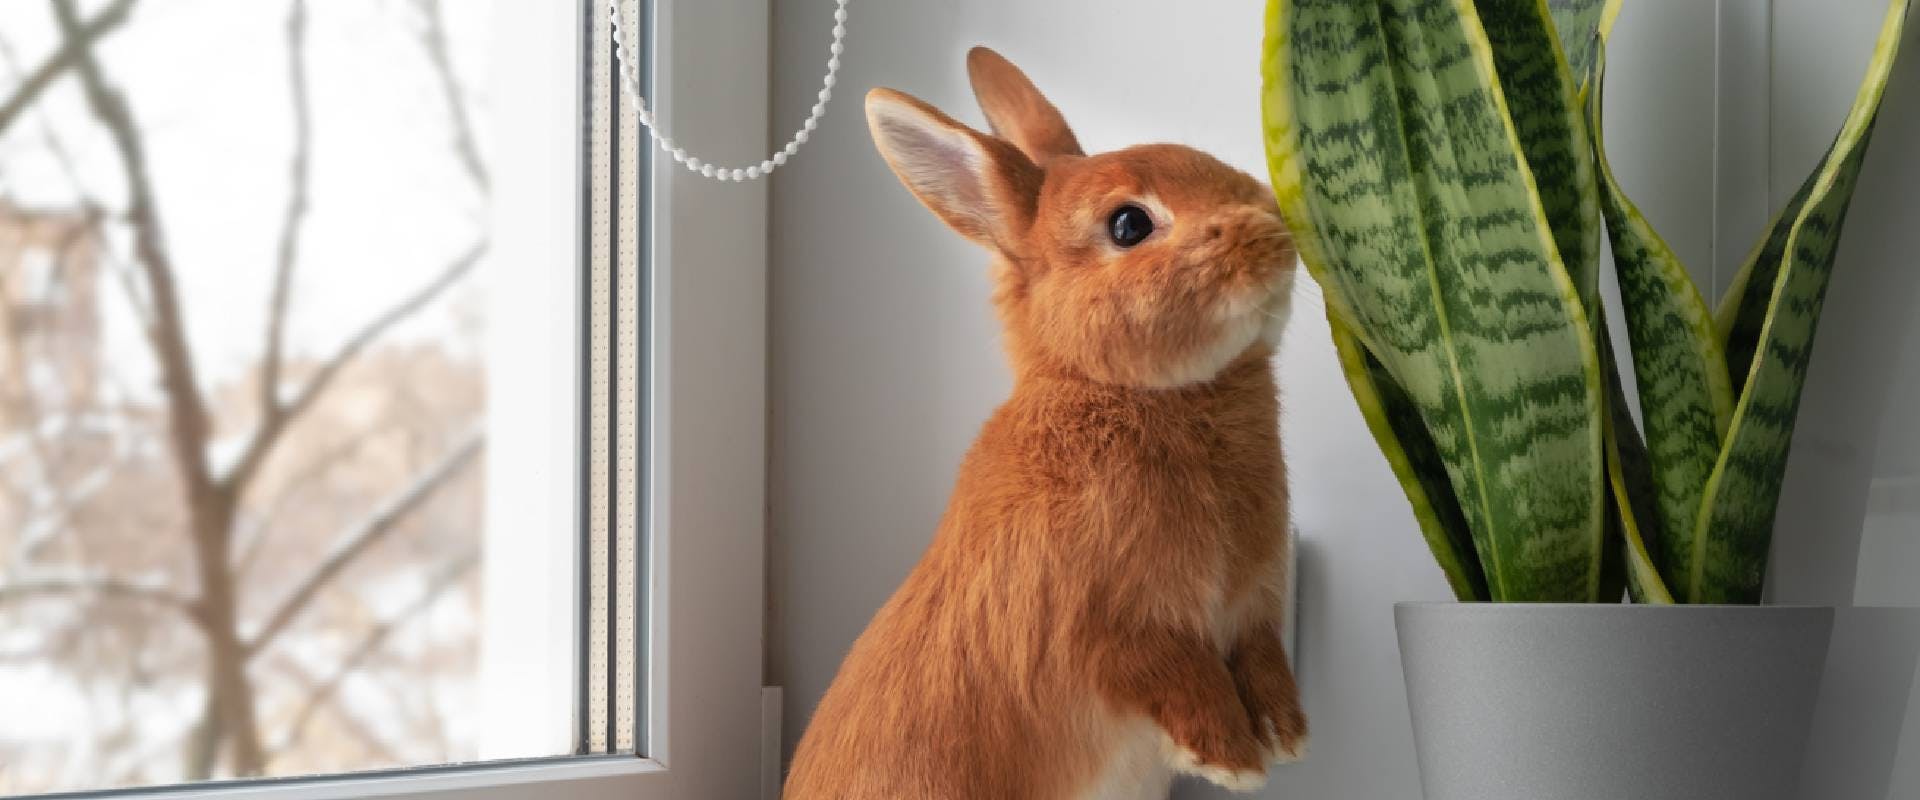 Rabbit sitting on hind legs next to a window